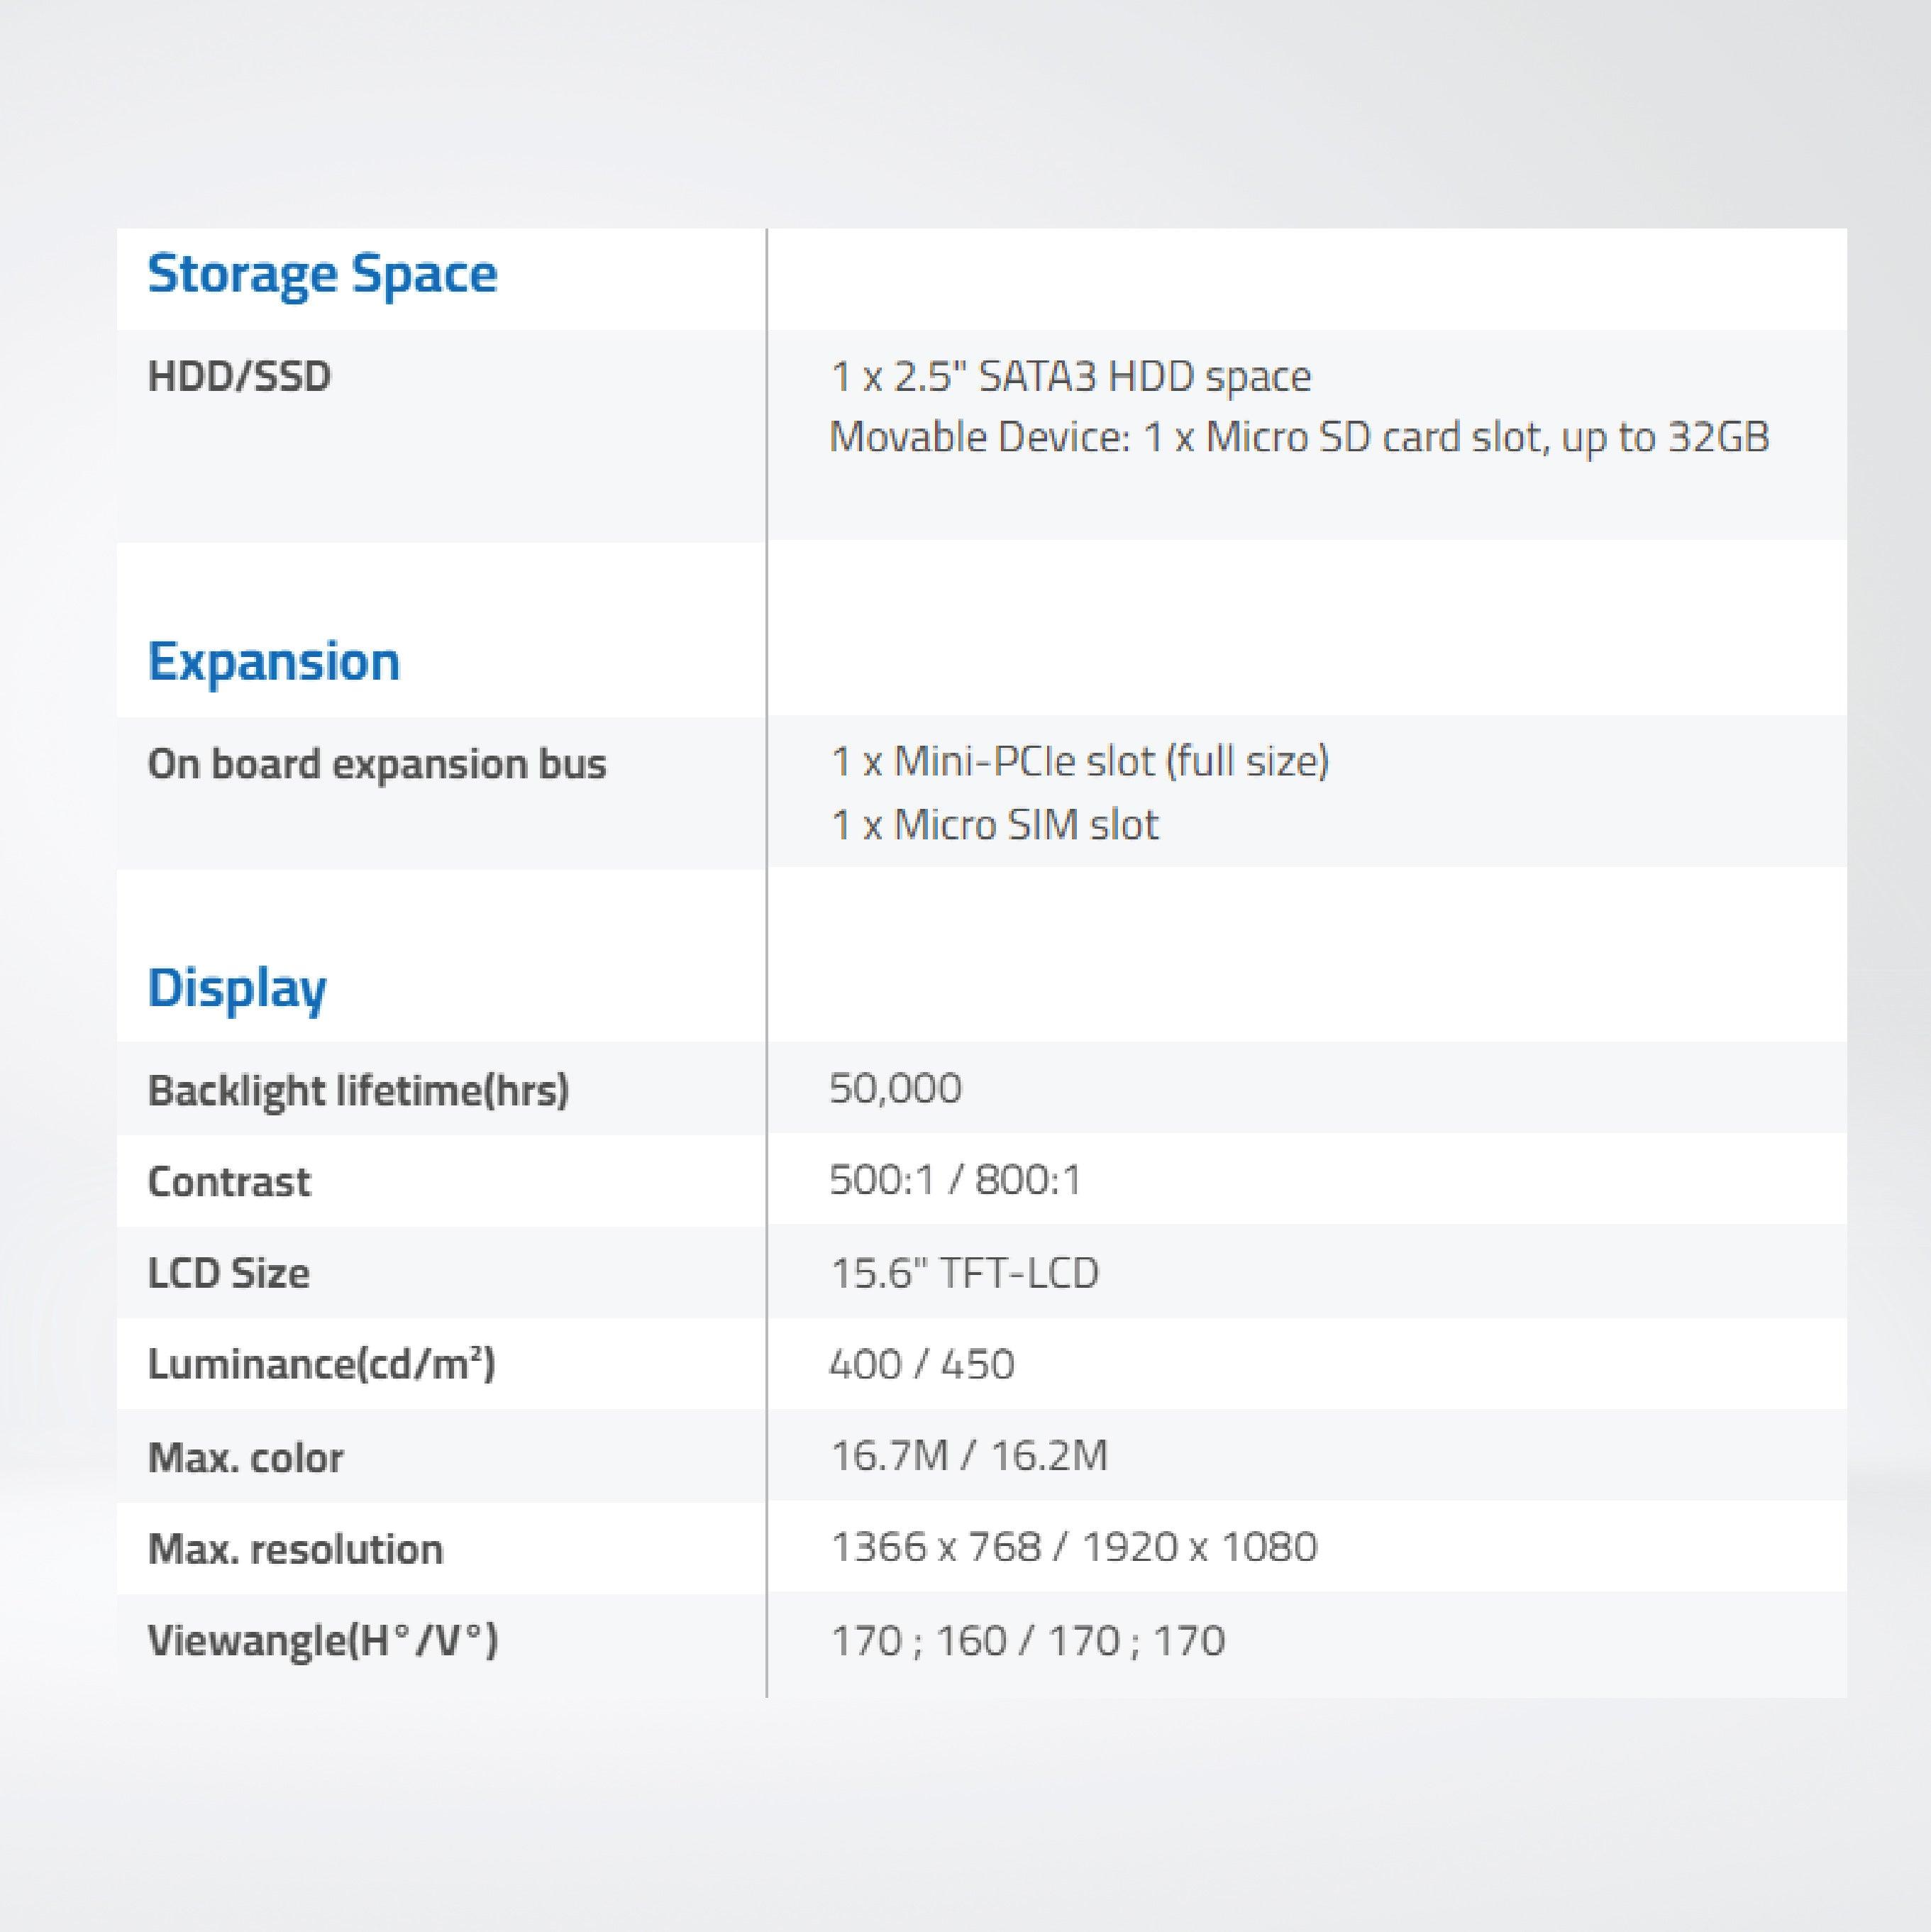 ARCHMI-816P 15.6" Intel Celeron N2930/ Atom E3845, Fanless Industrial Compact Size Panel PC - Riverplus